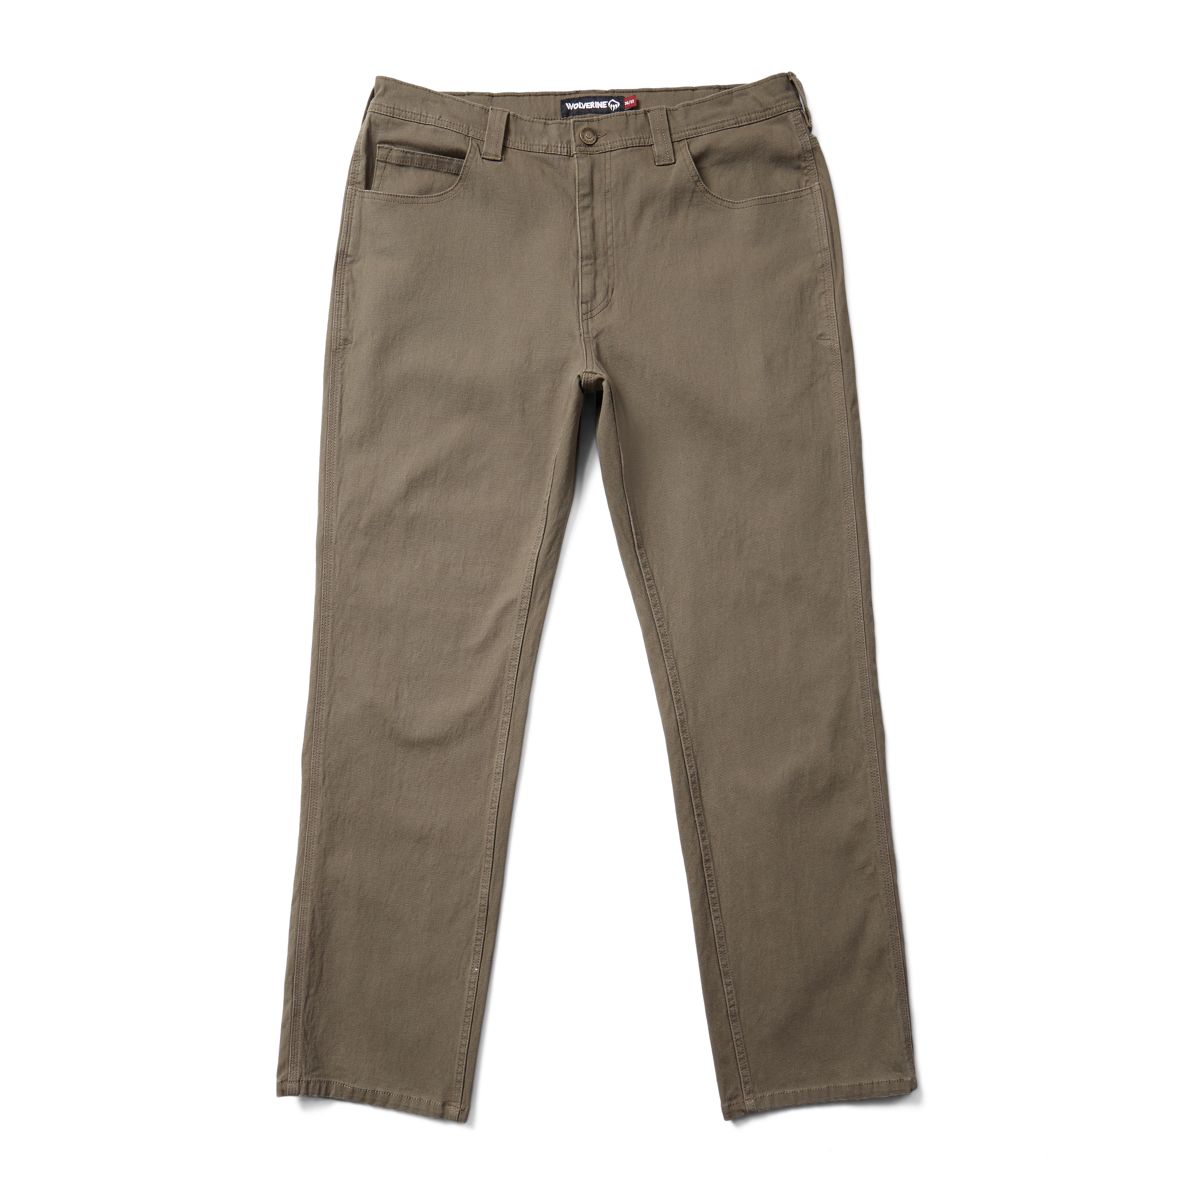 WOLVERINE Pantalon utilitaire stretch pour homme, Hickory : : Mode